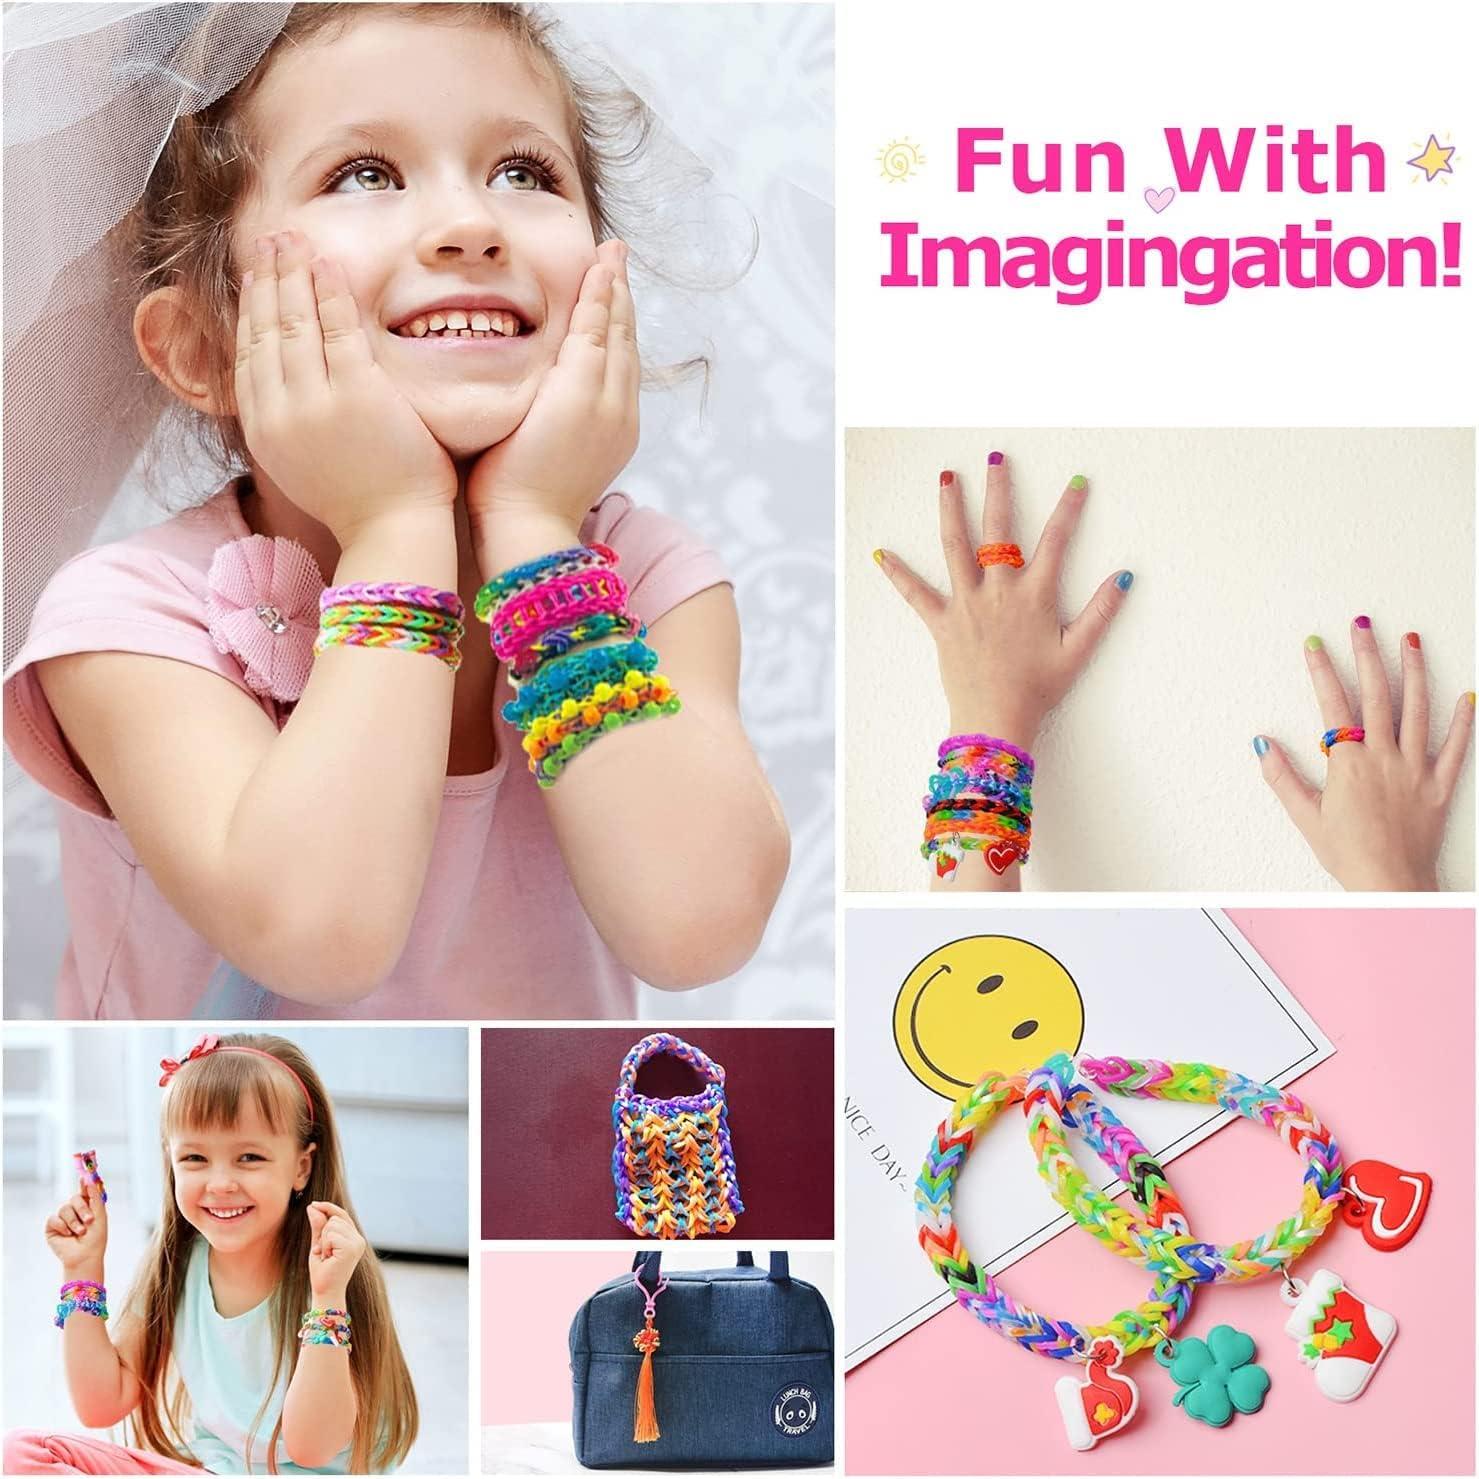 Bracelet-Making Kit For Kids - TwoElephants